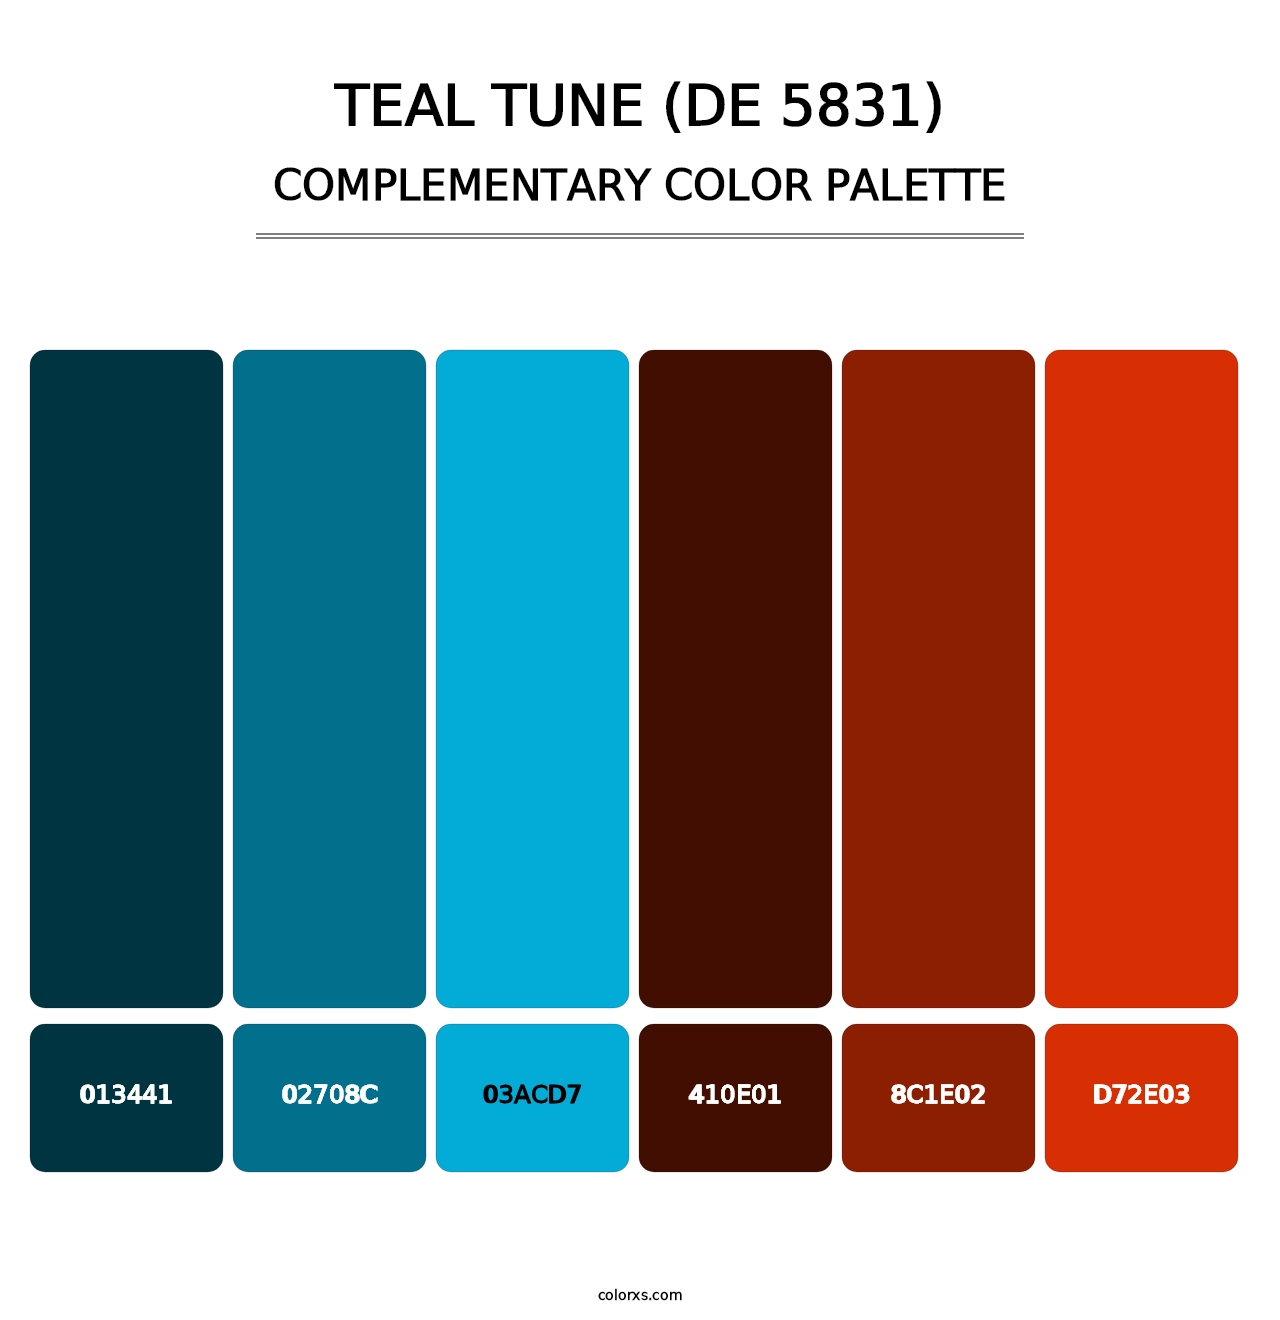 Teal Tune (DE 5831) - Complementary Color Palette